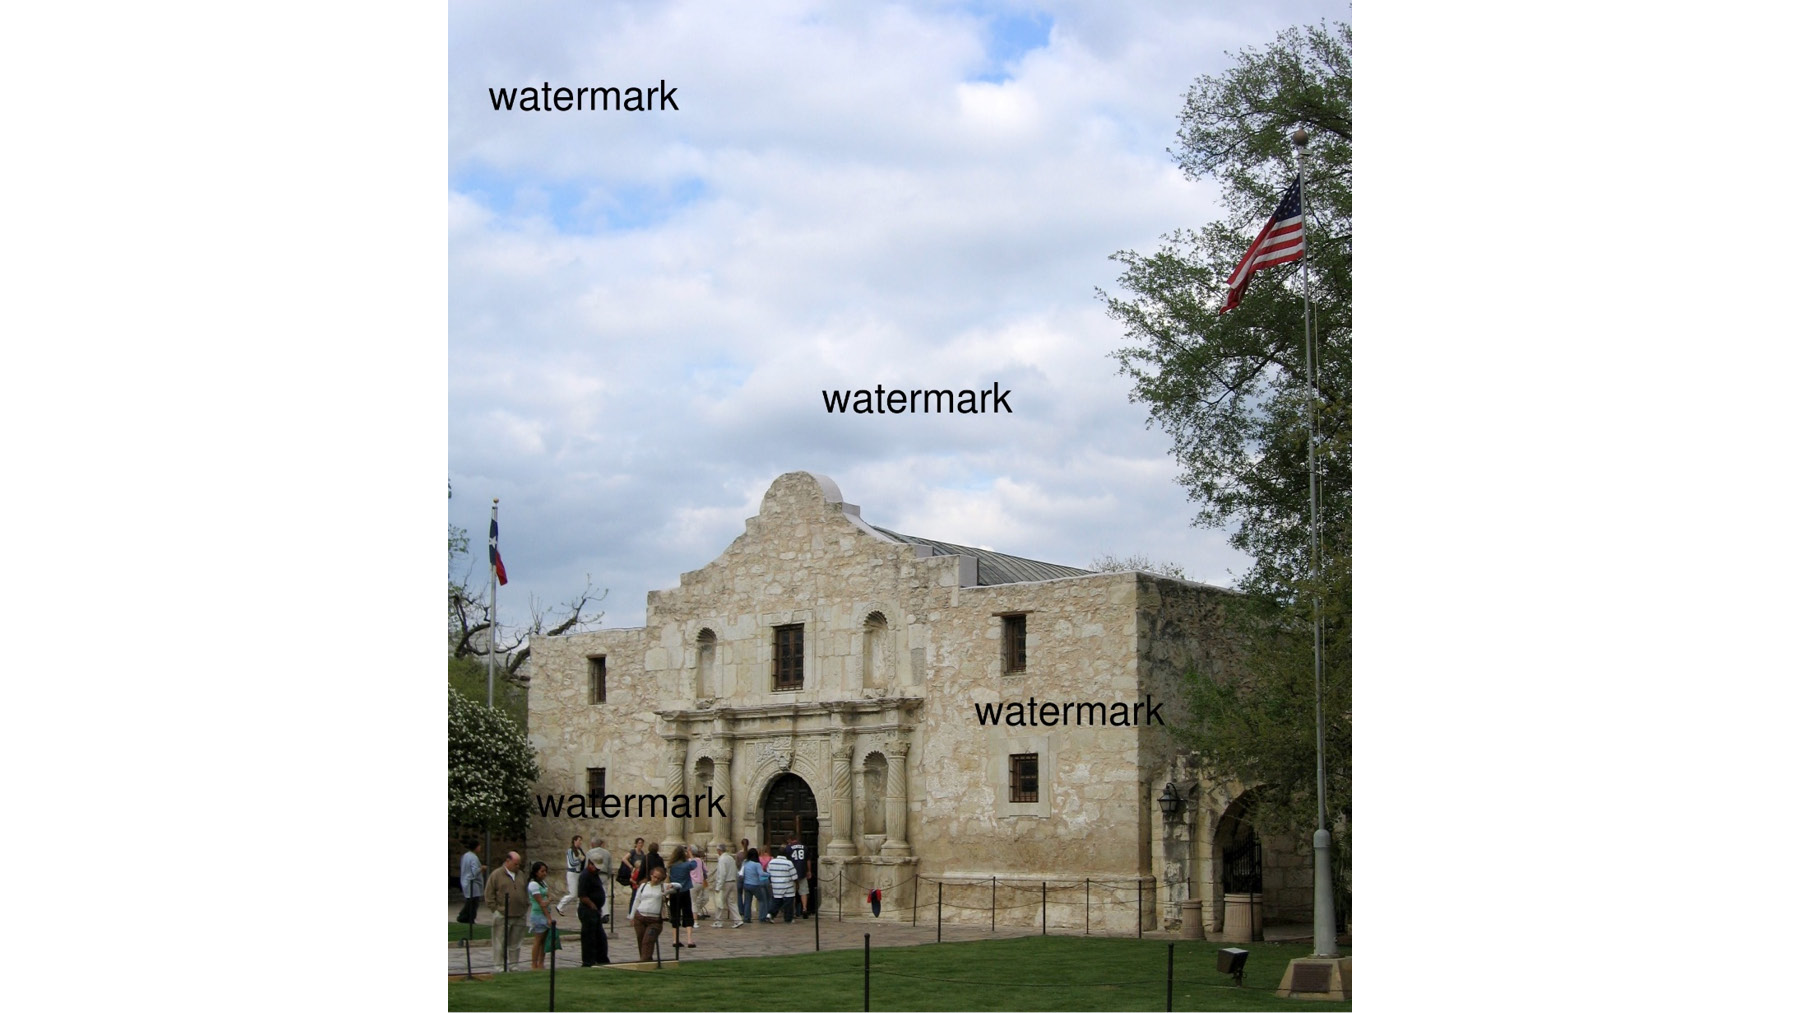 Figure 5.5: Alamo_marked image
